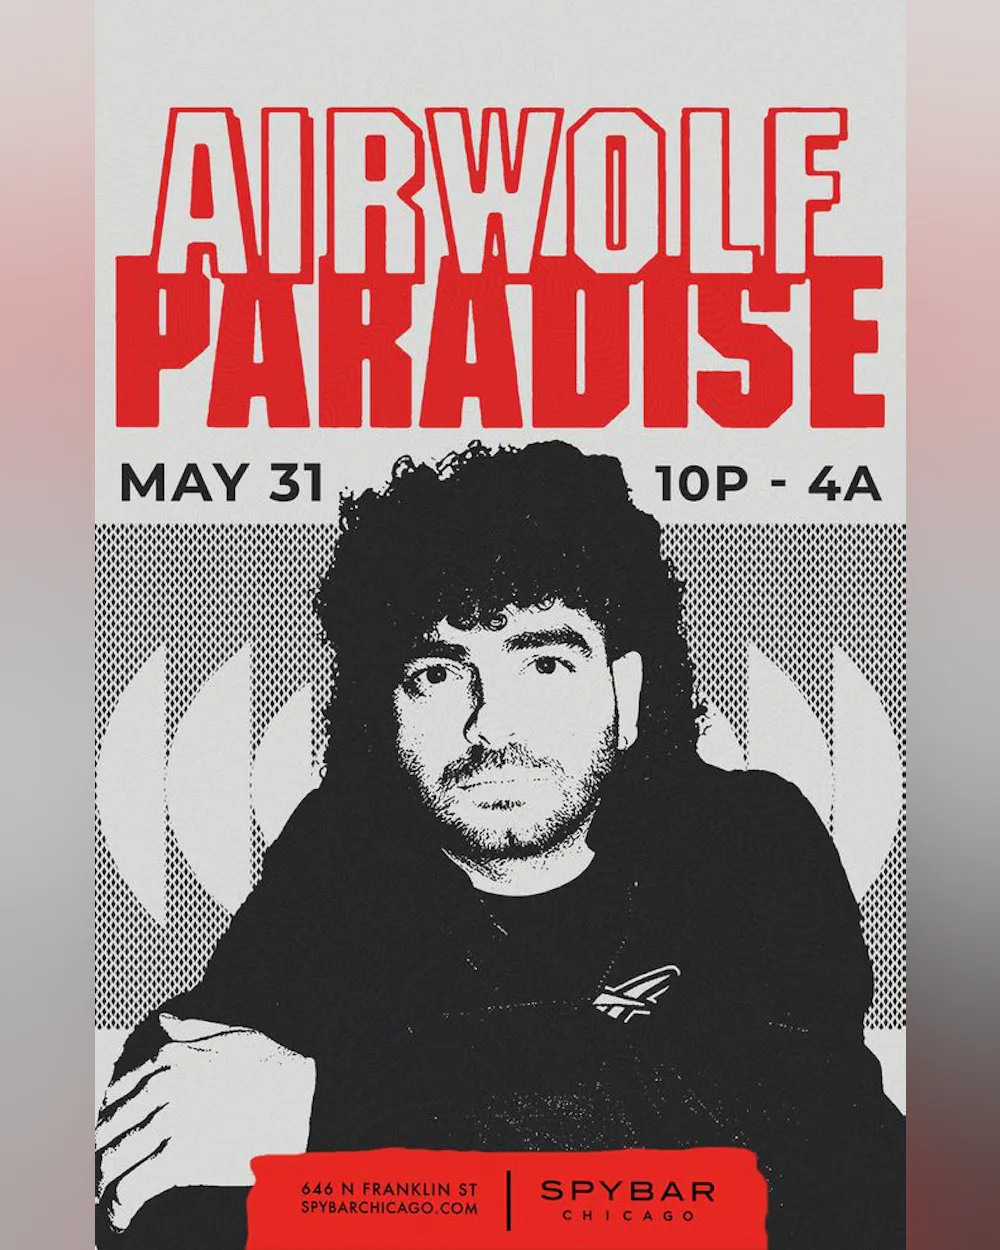 Airwolf Paradise